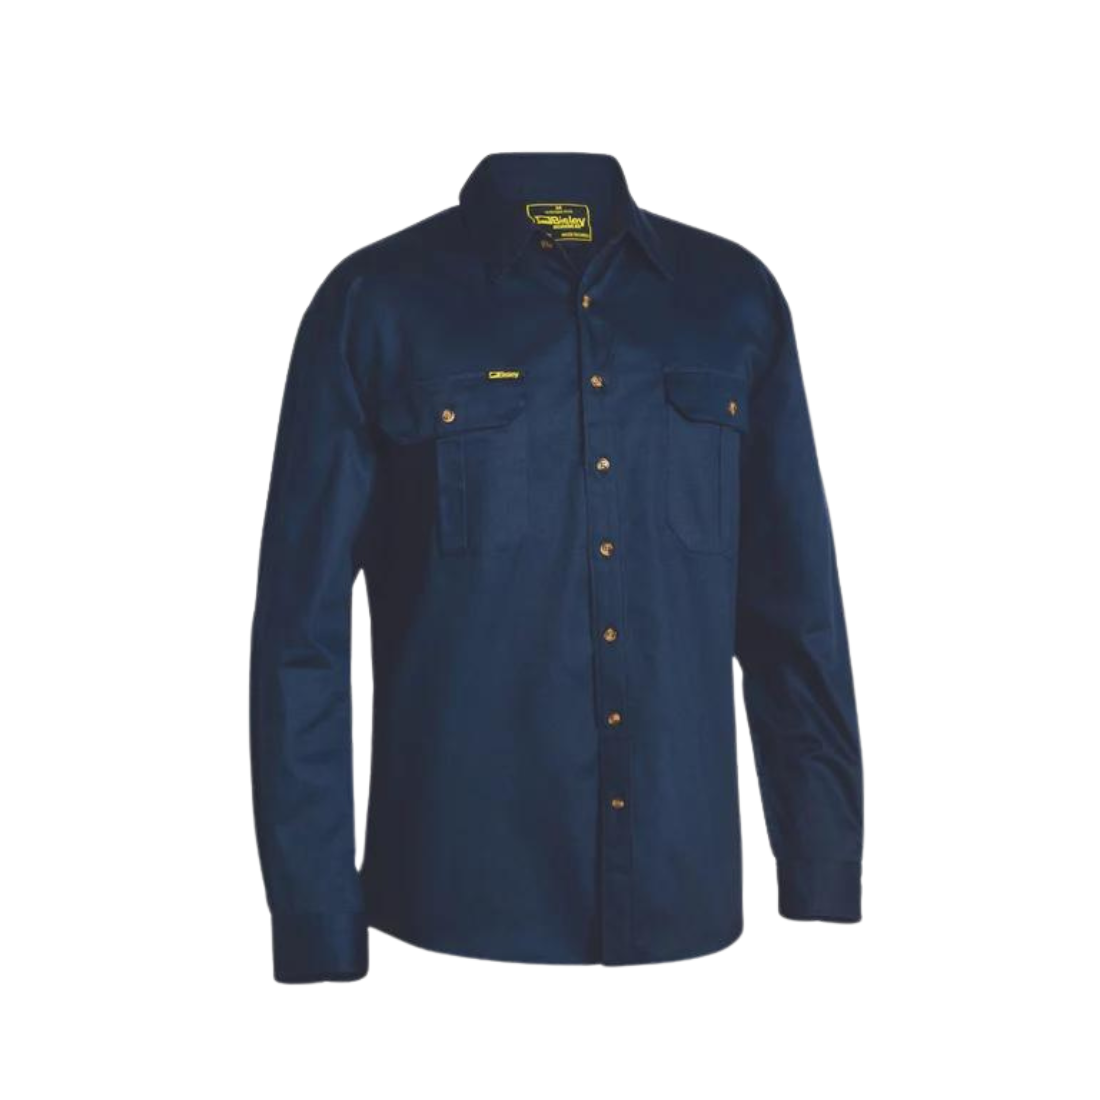 Original Cotton Drill Work Shirt - Long Sleeve S Navy Workwear by Bisley | The Bloke Shop